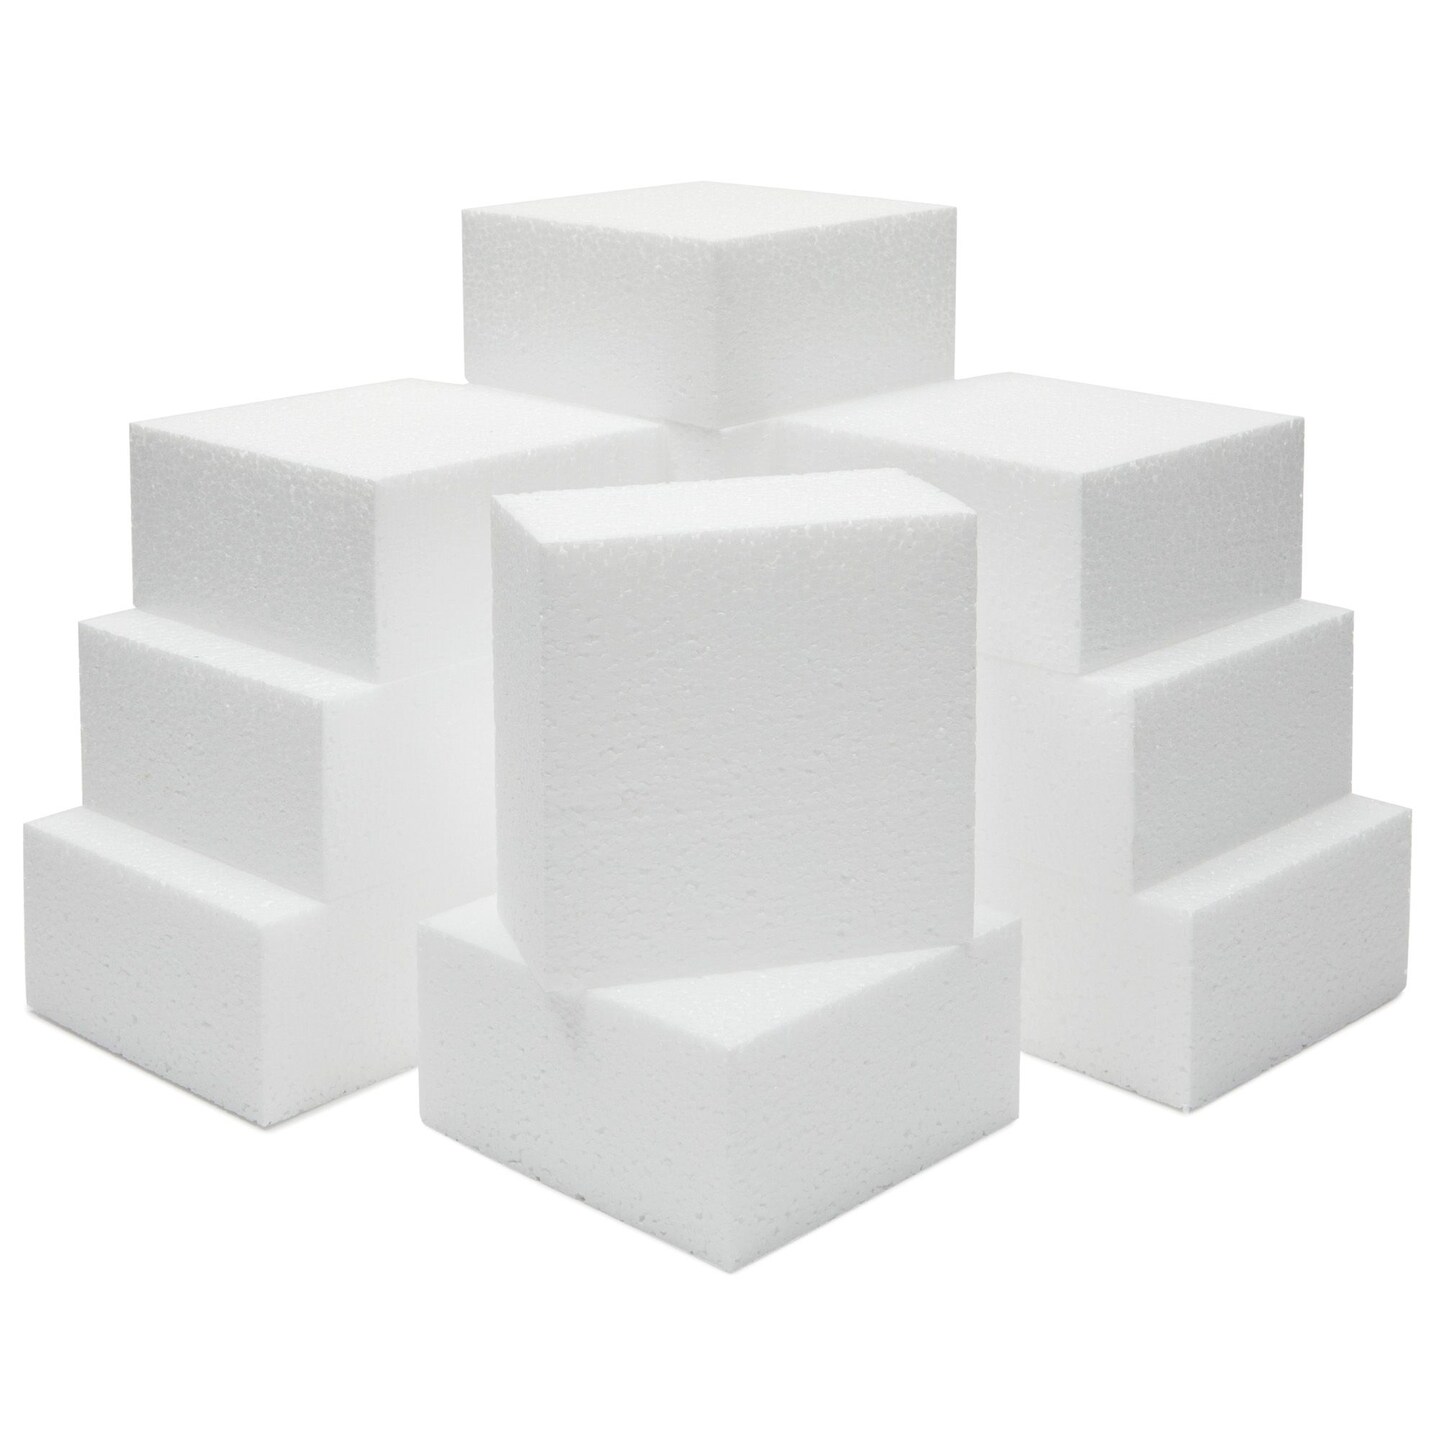 12 Pack Foam Blocks for Crafts, Polystyrene Brick Rectangles for